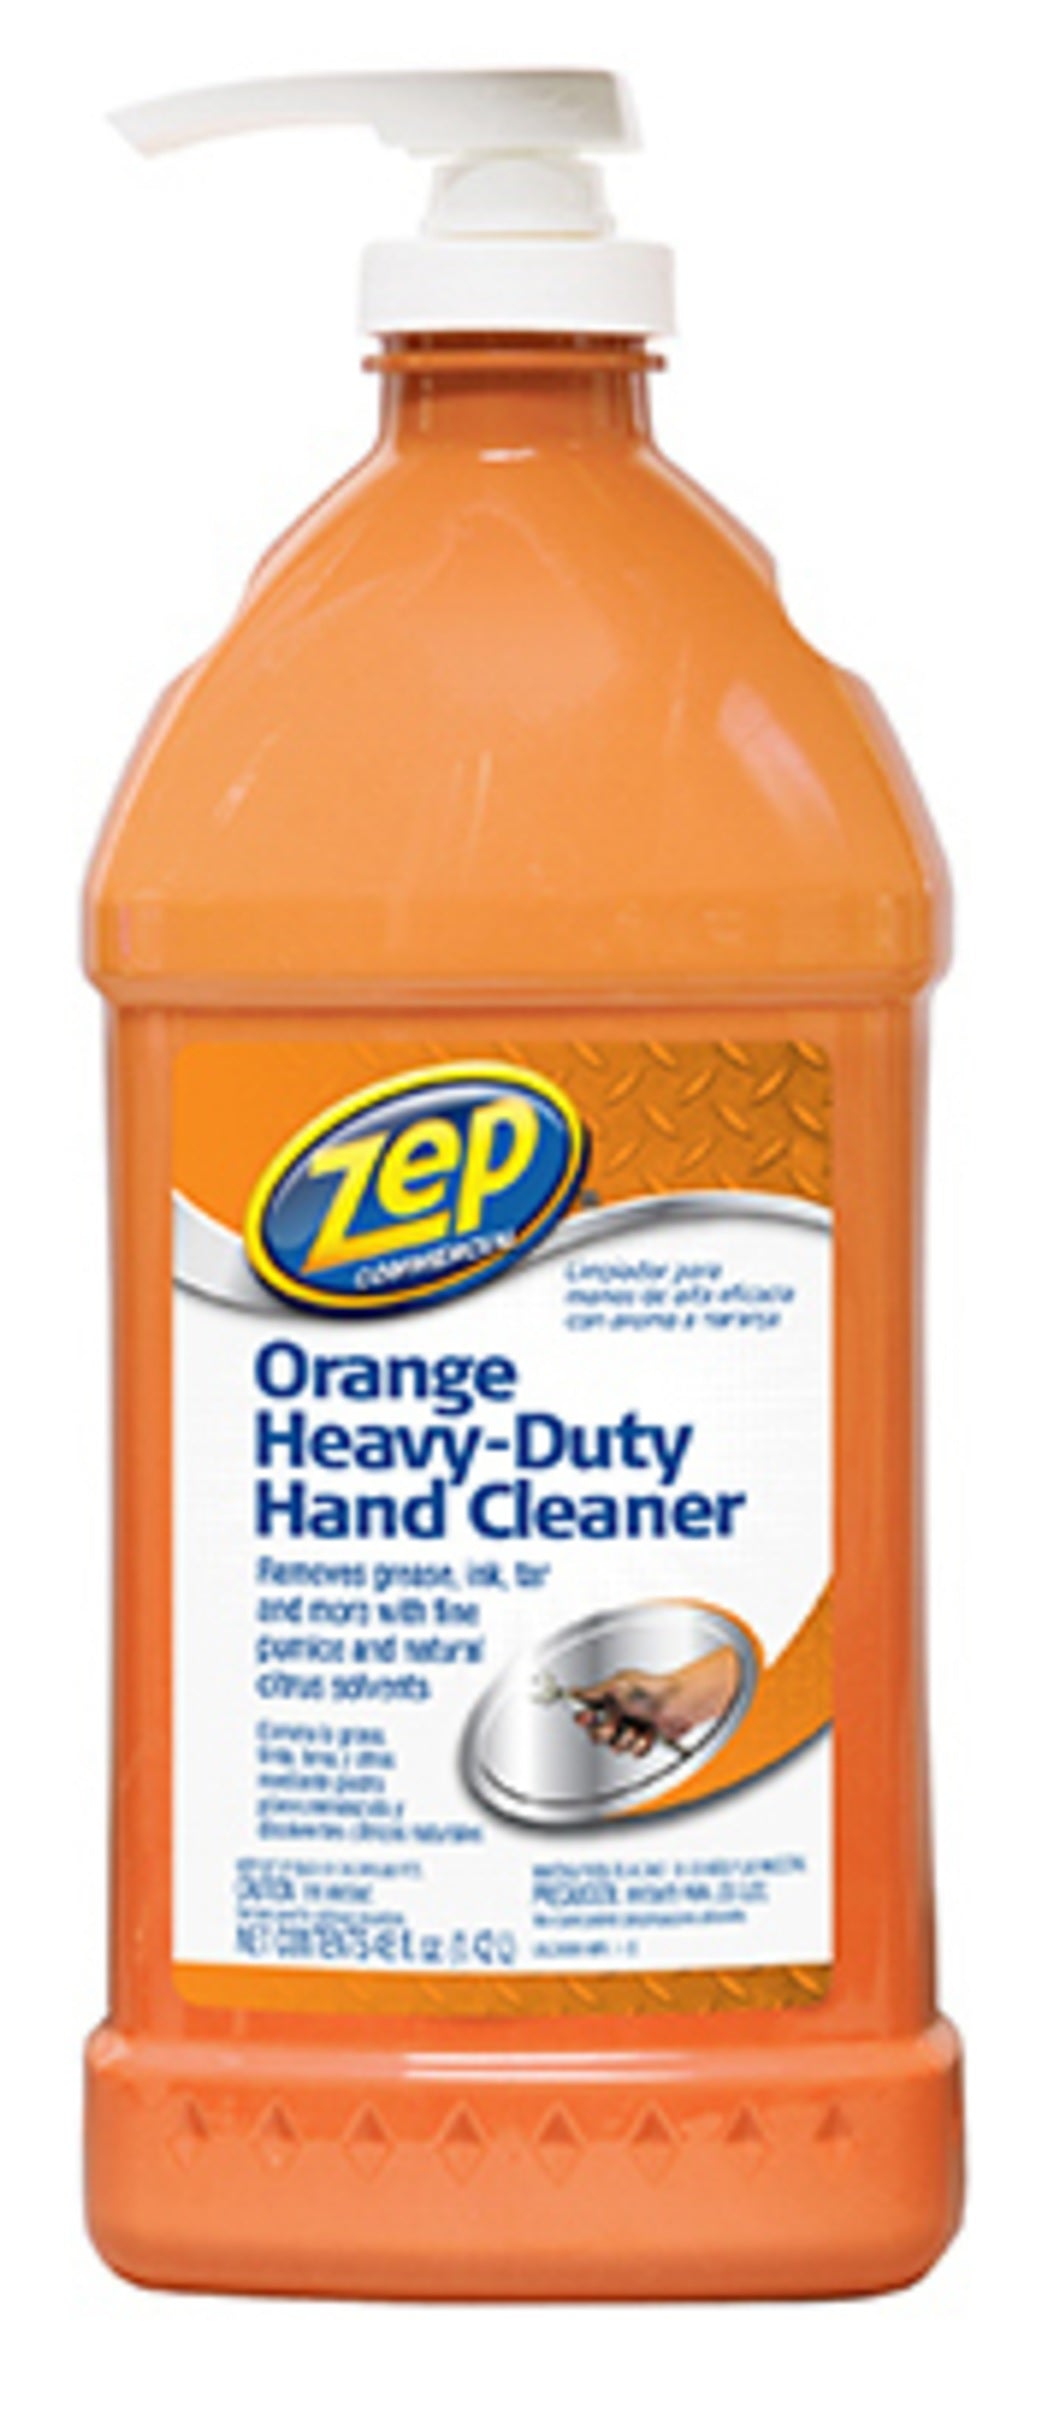 Zep R45710 Orange Heavy-Duty Hand Cleaner, 48 Ounce